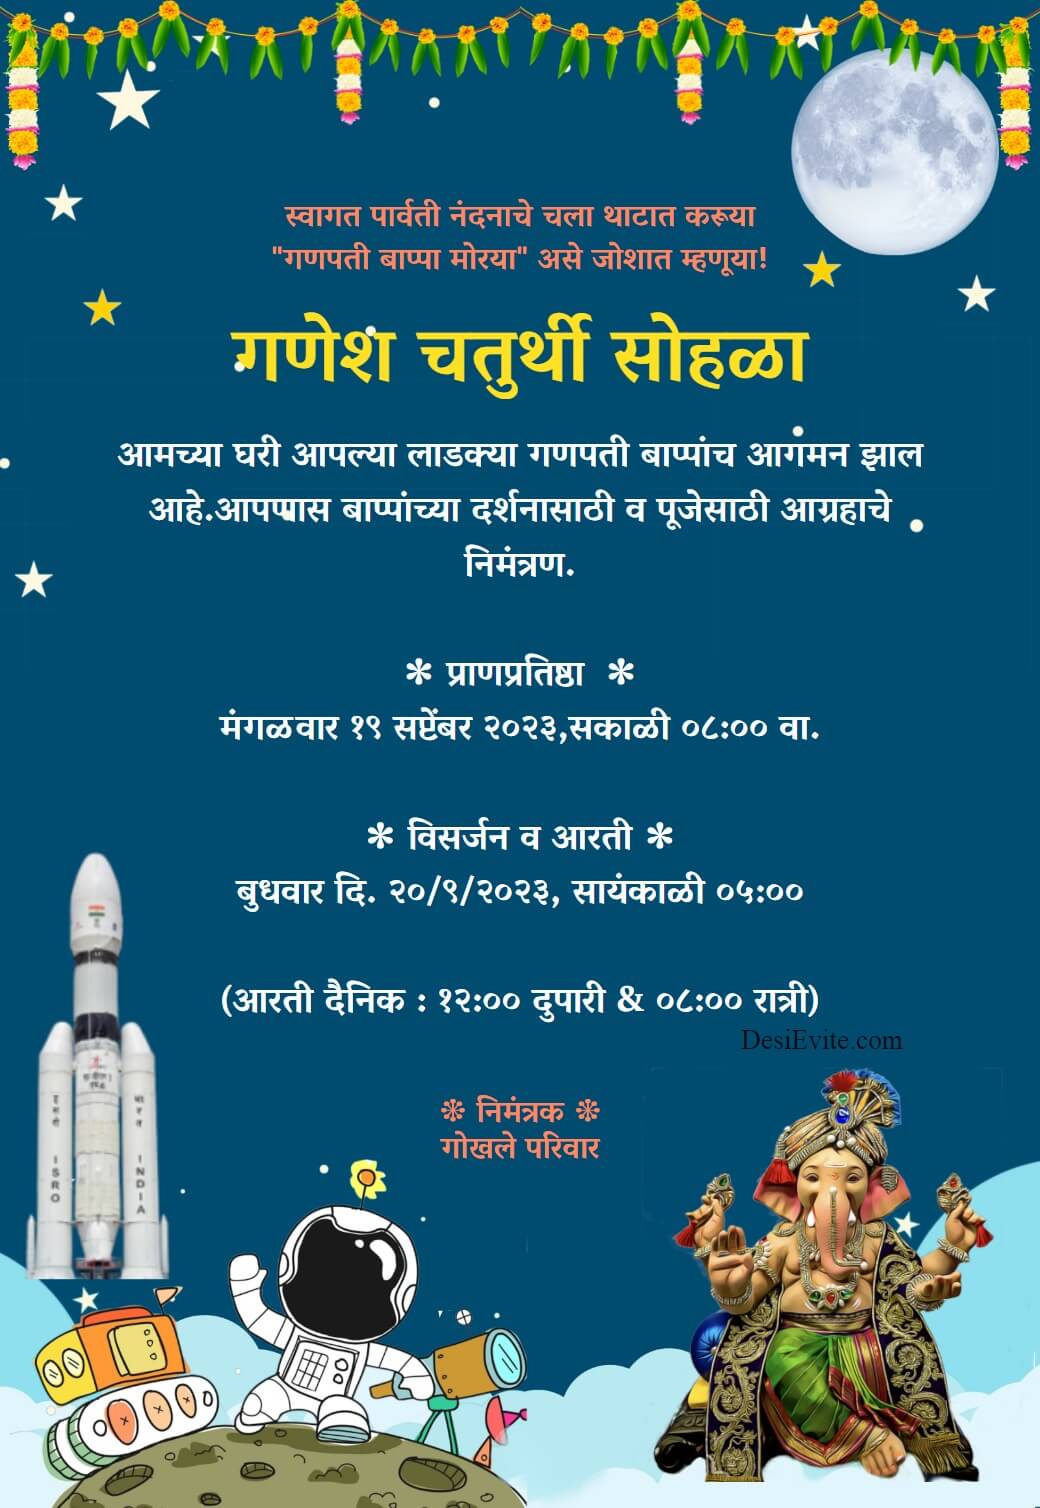 Ganesh Chturthi Invitation Card Chandrayaan theme 2023